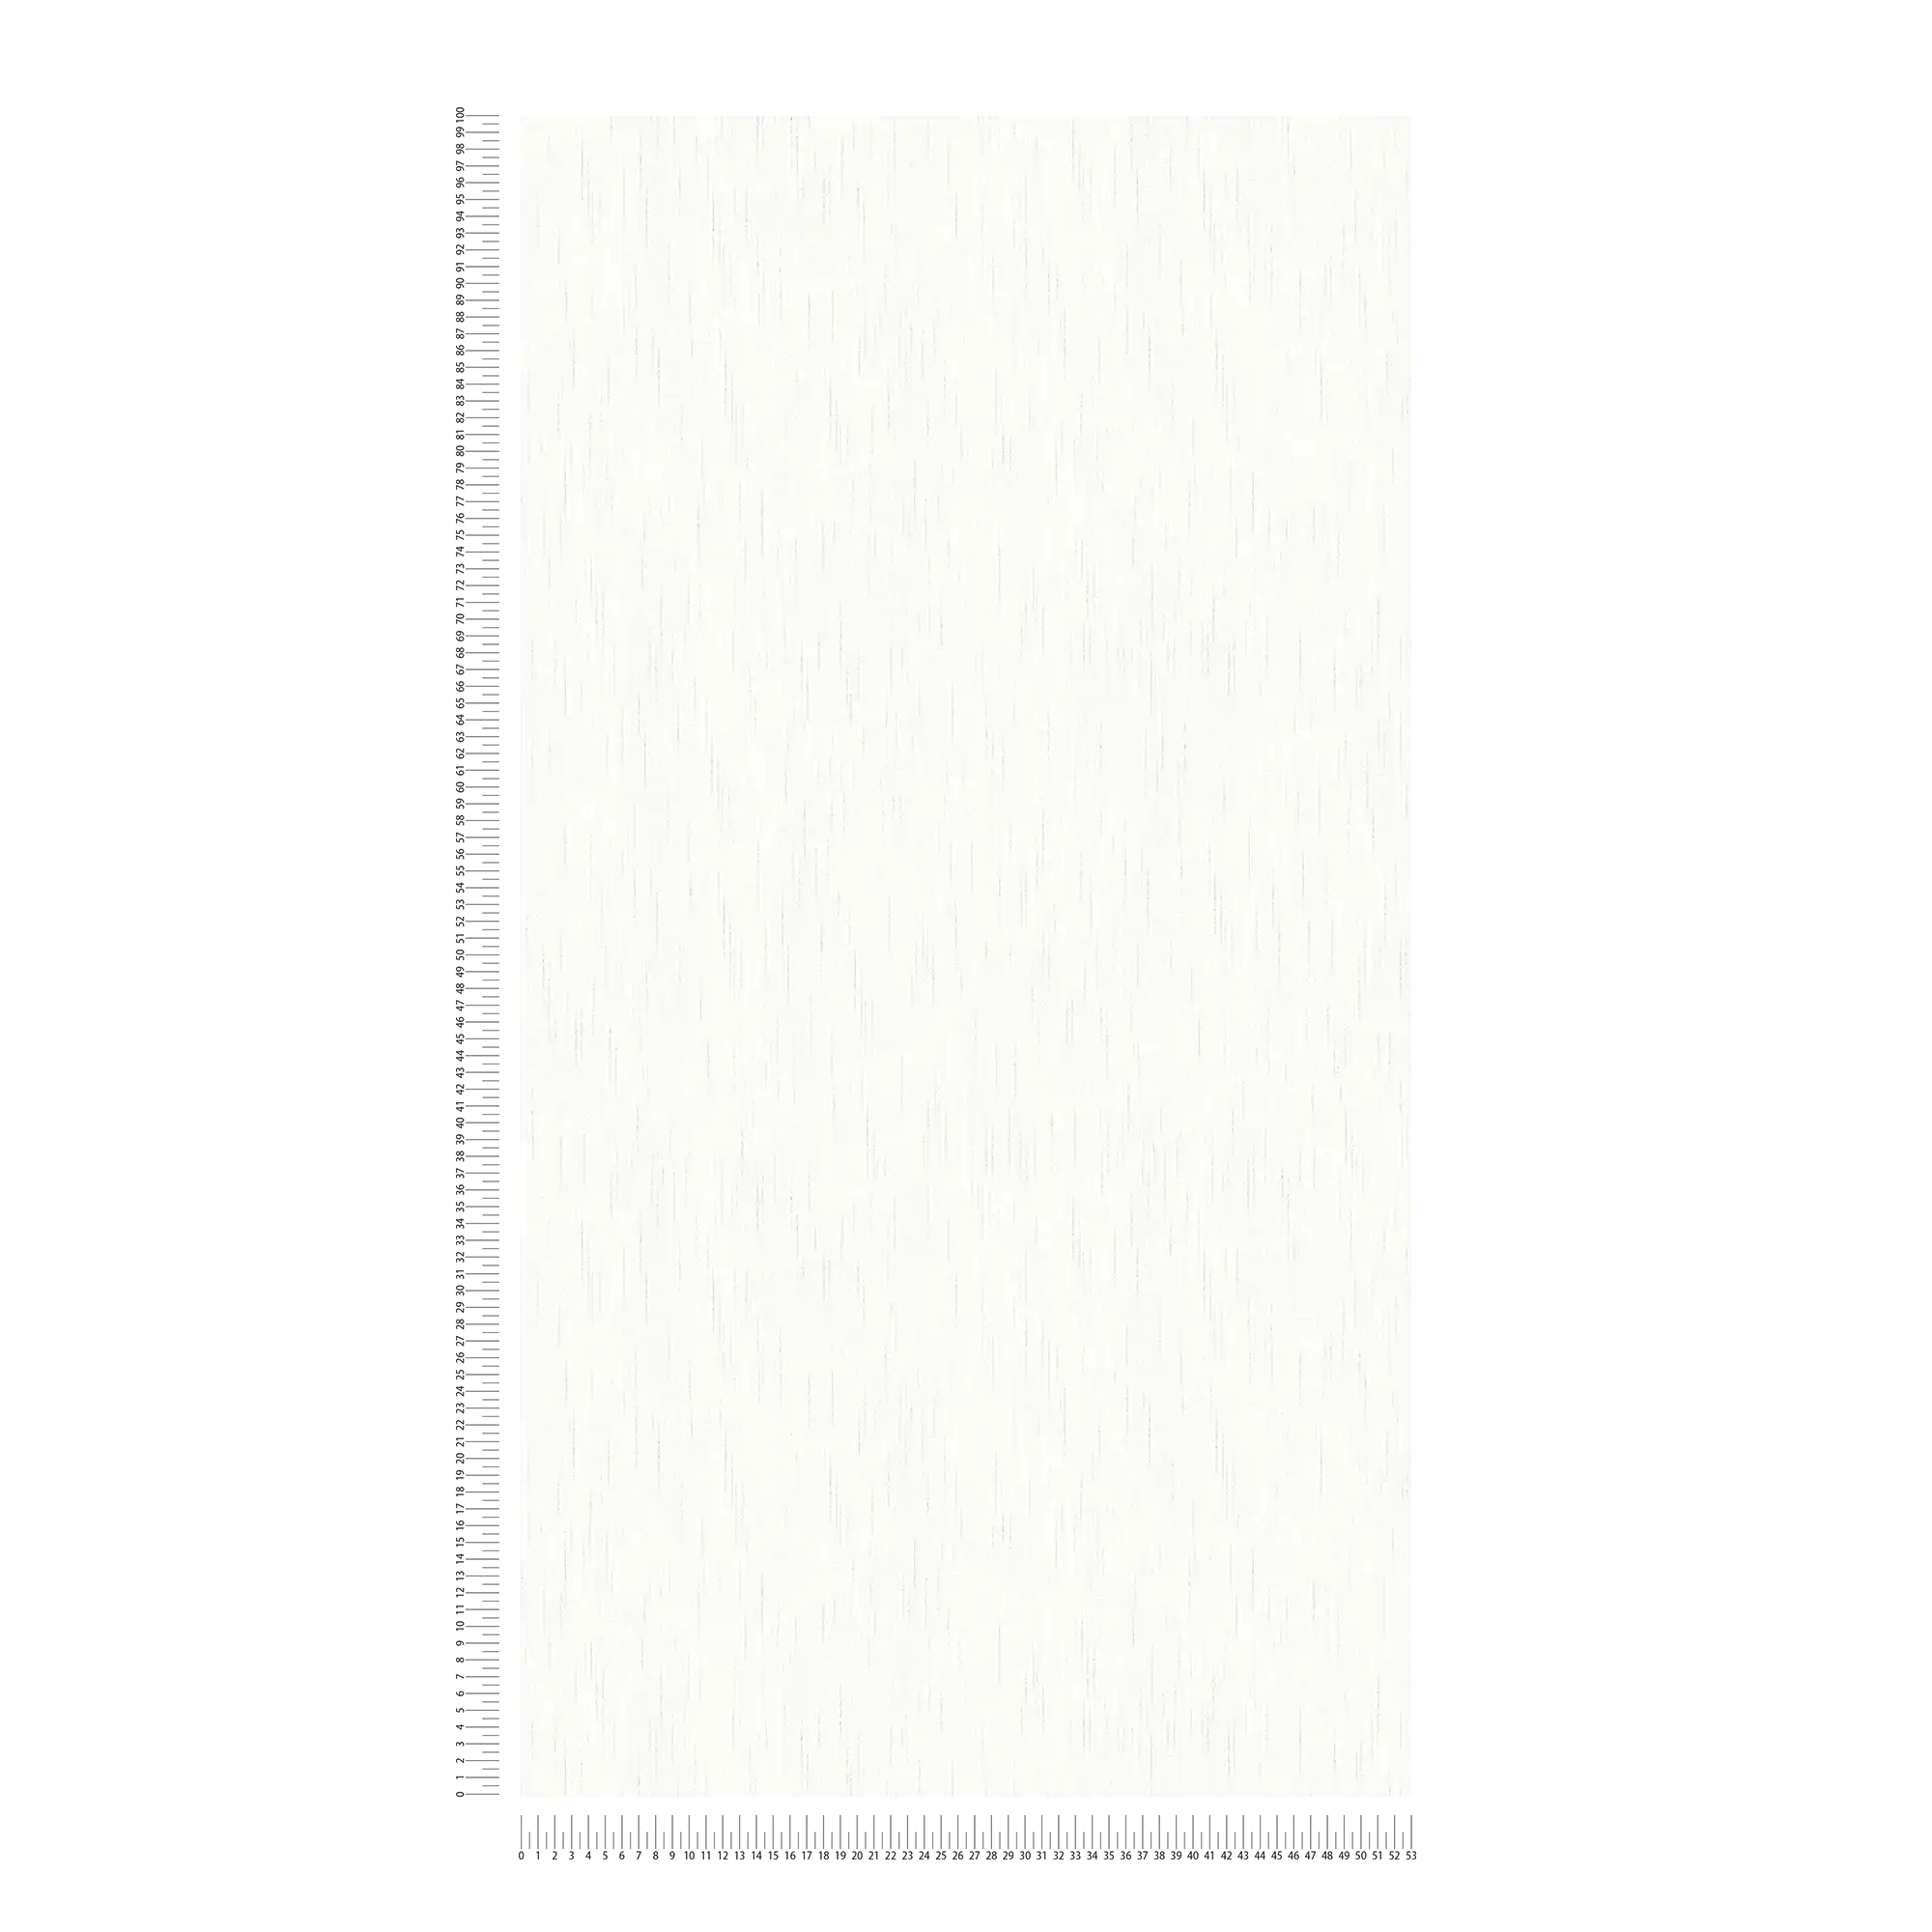             Carta da parati a tinta unita in tessuto non tessuto bianca con fili metallici screziati
        